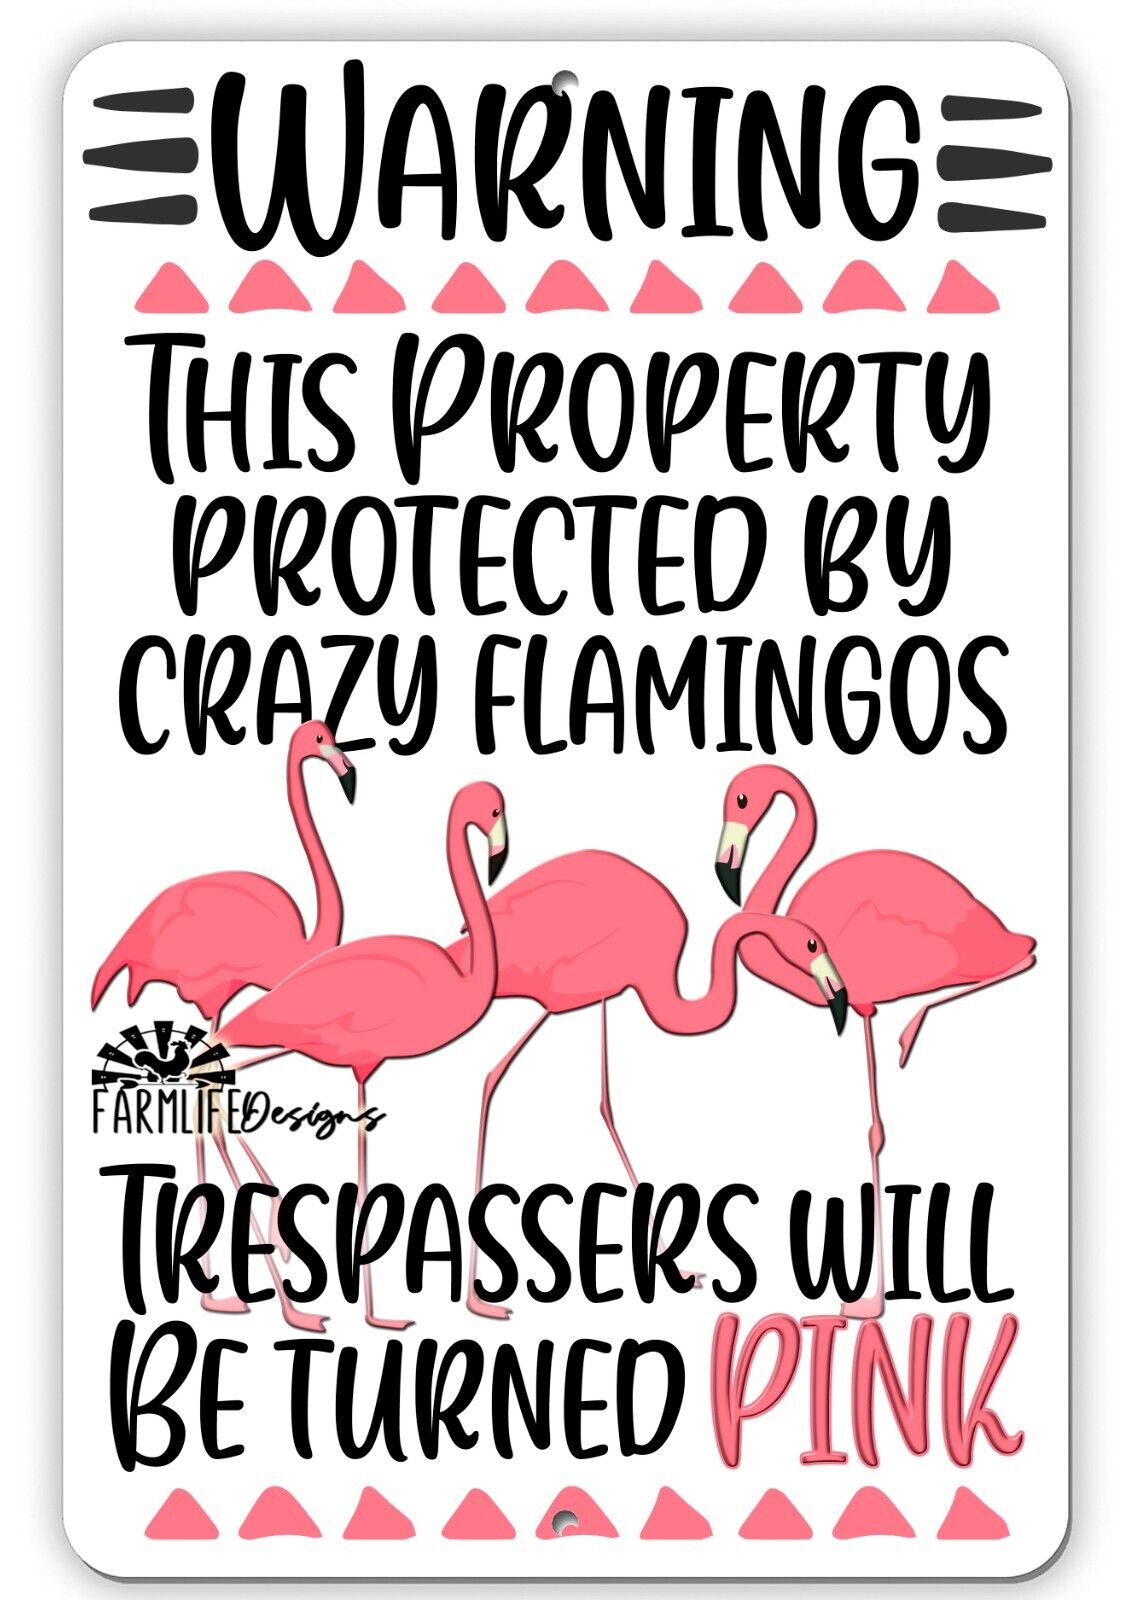 Crazy Flamingo Sign - Warning Trespassers will be Turned Pink - 8x12 handmade